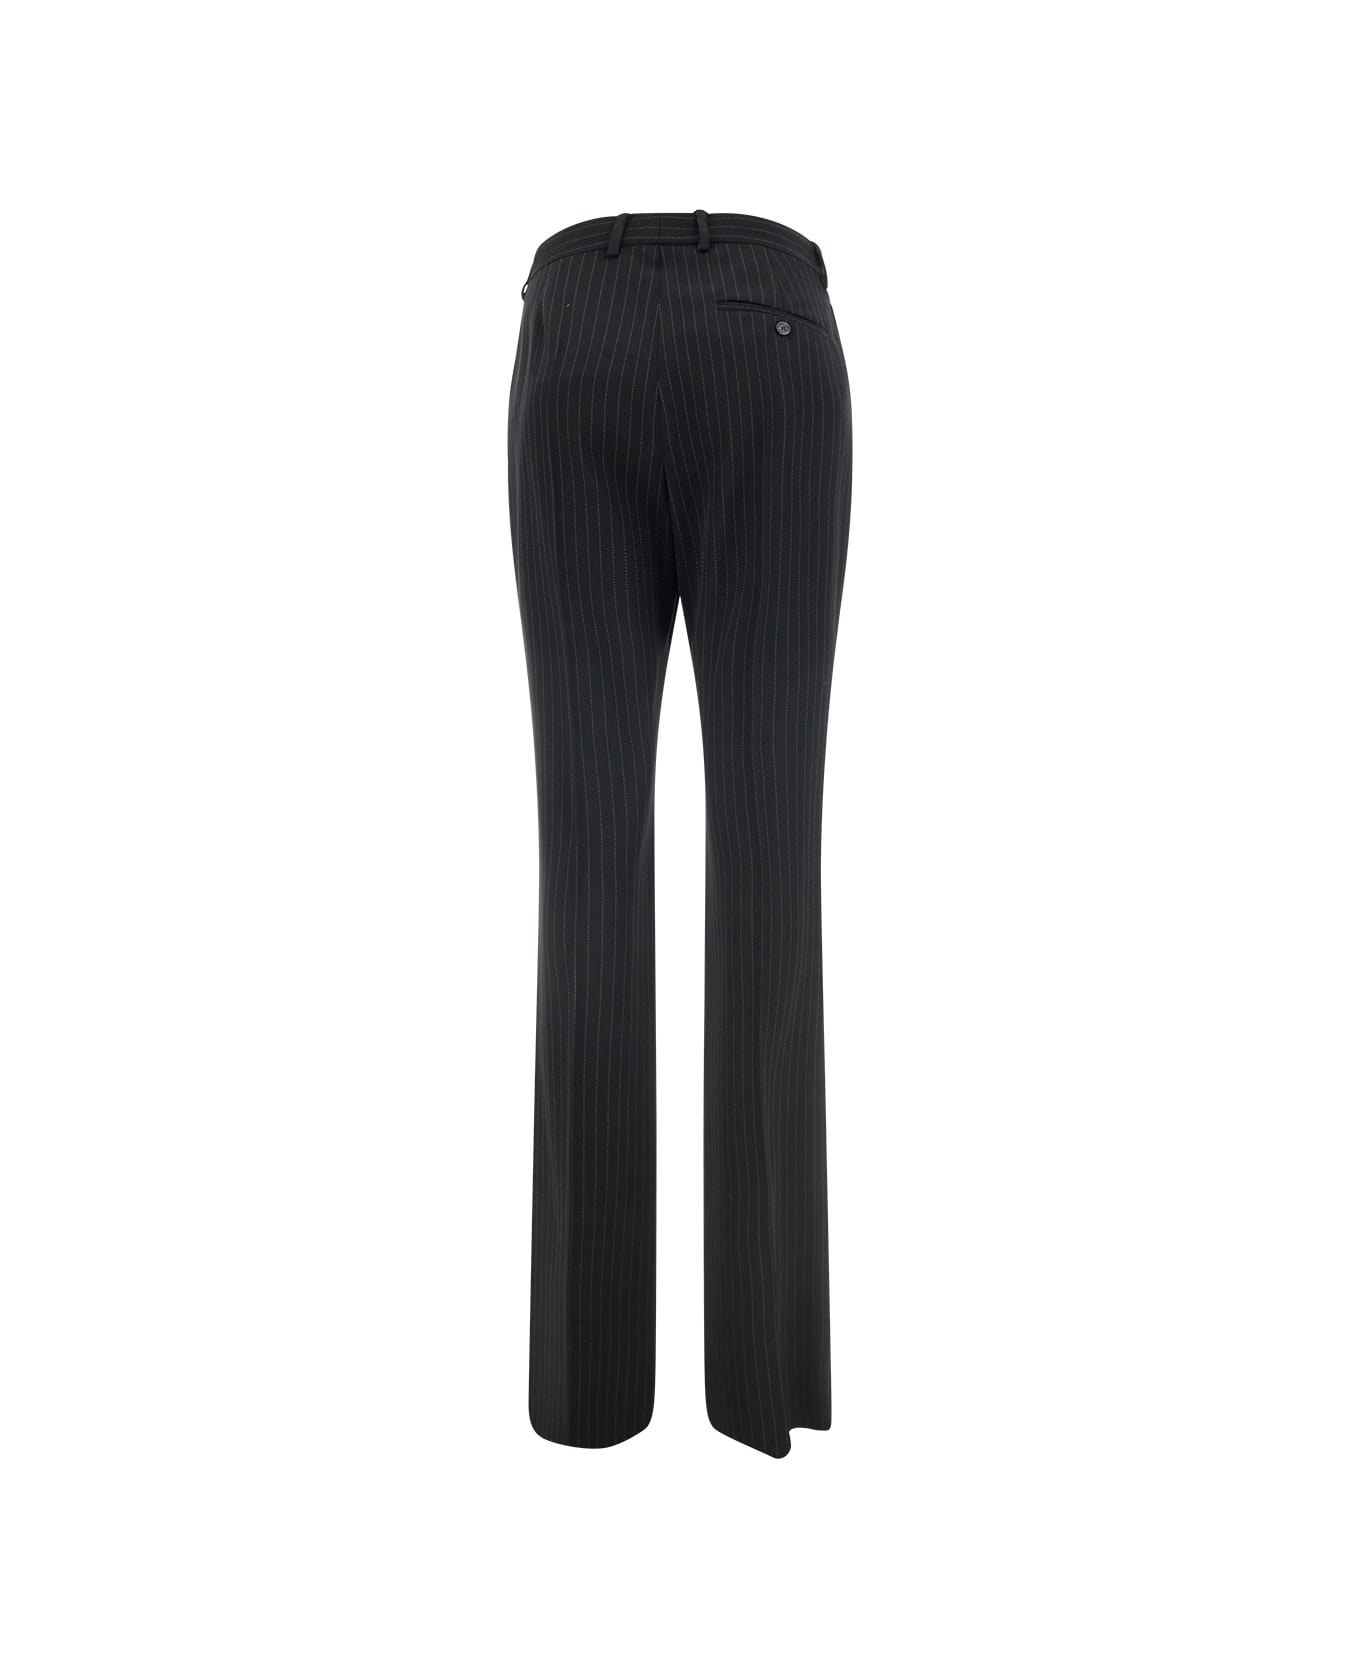 Balenciaga Pants - Black/white